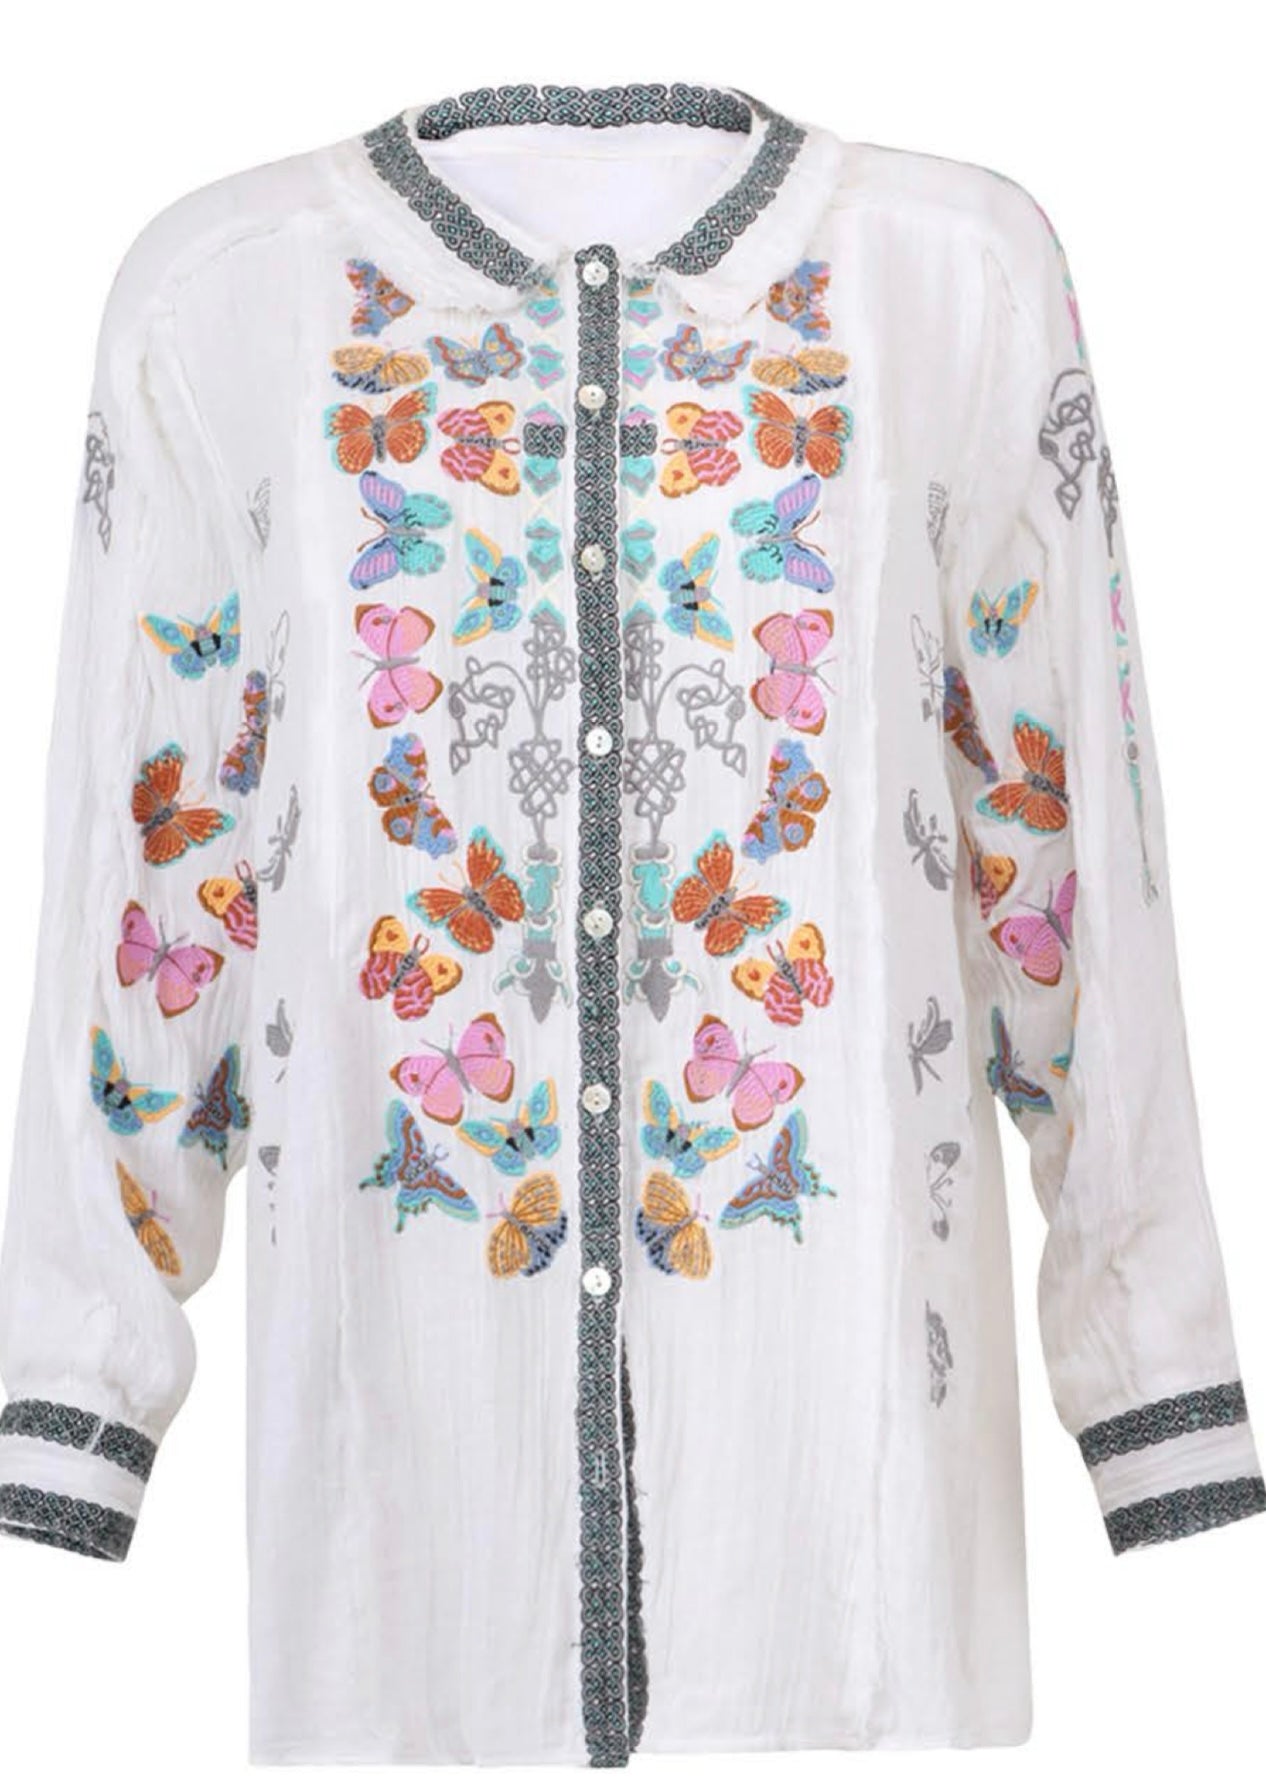 Butterflies Galore White Woven Button Front Shirt